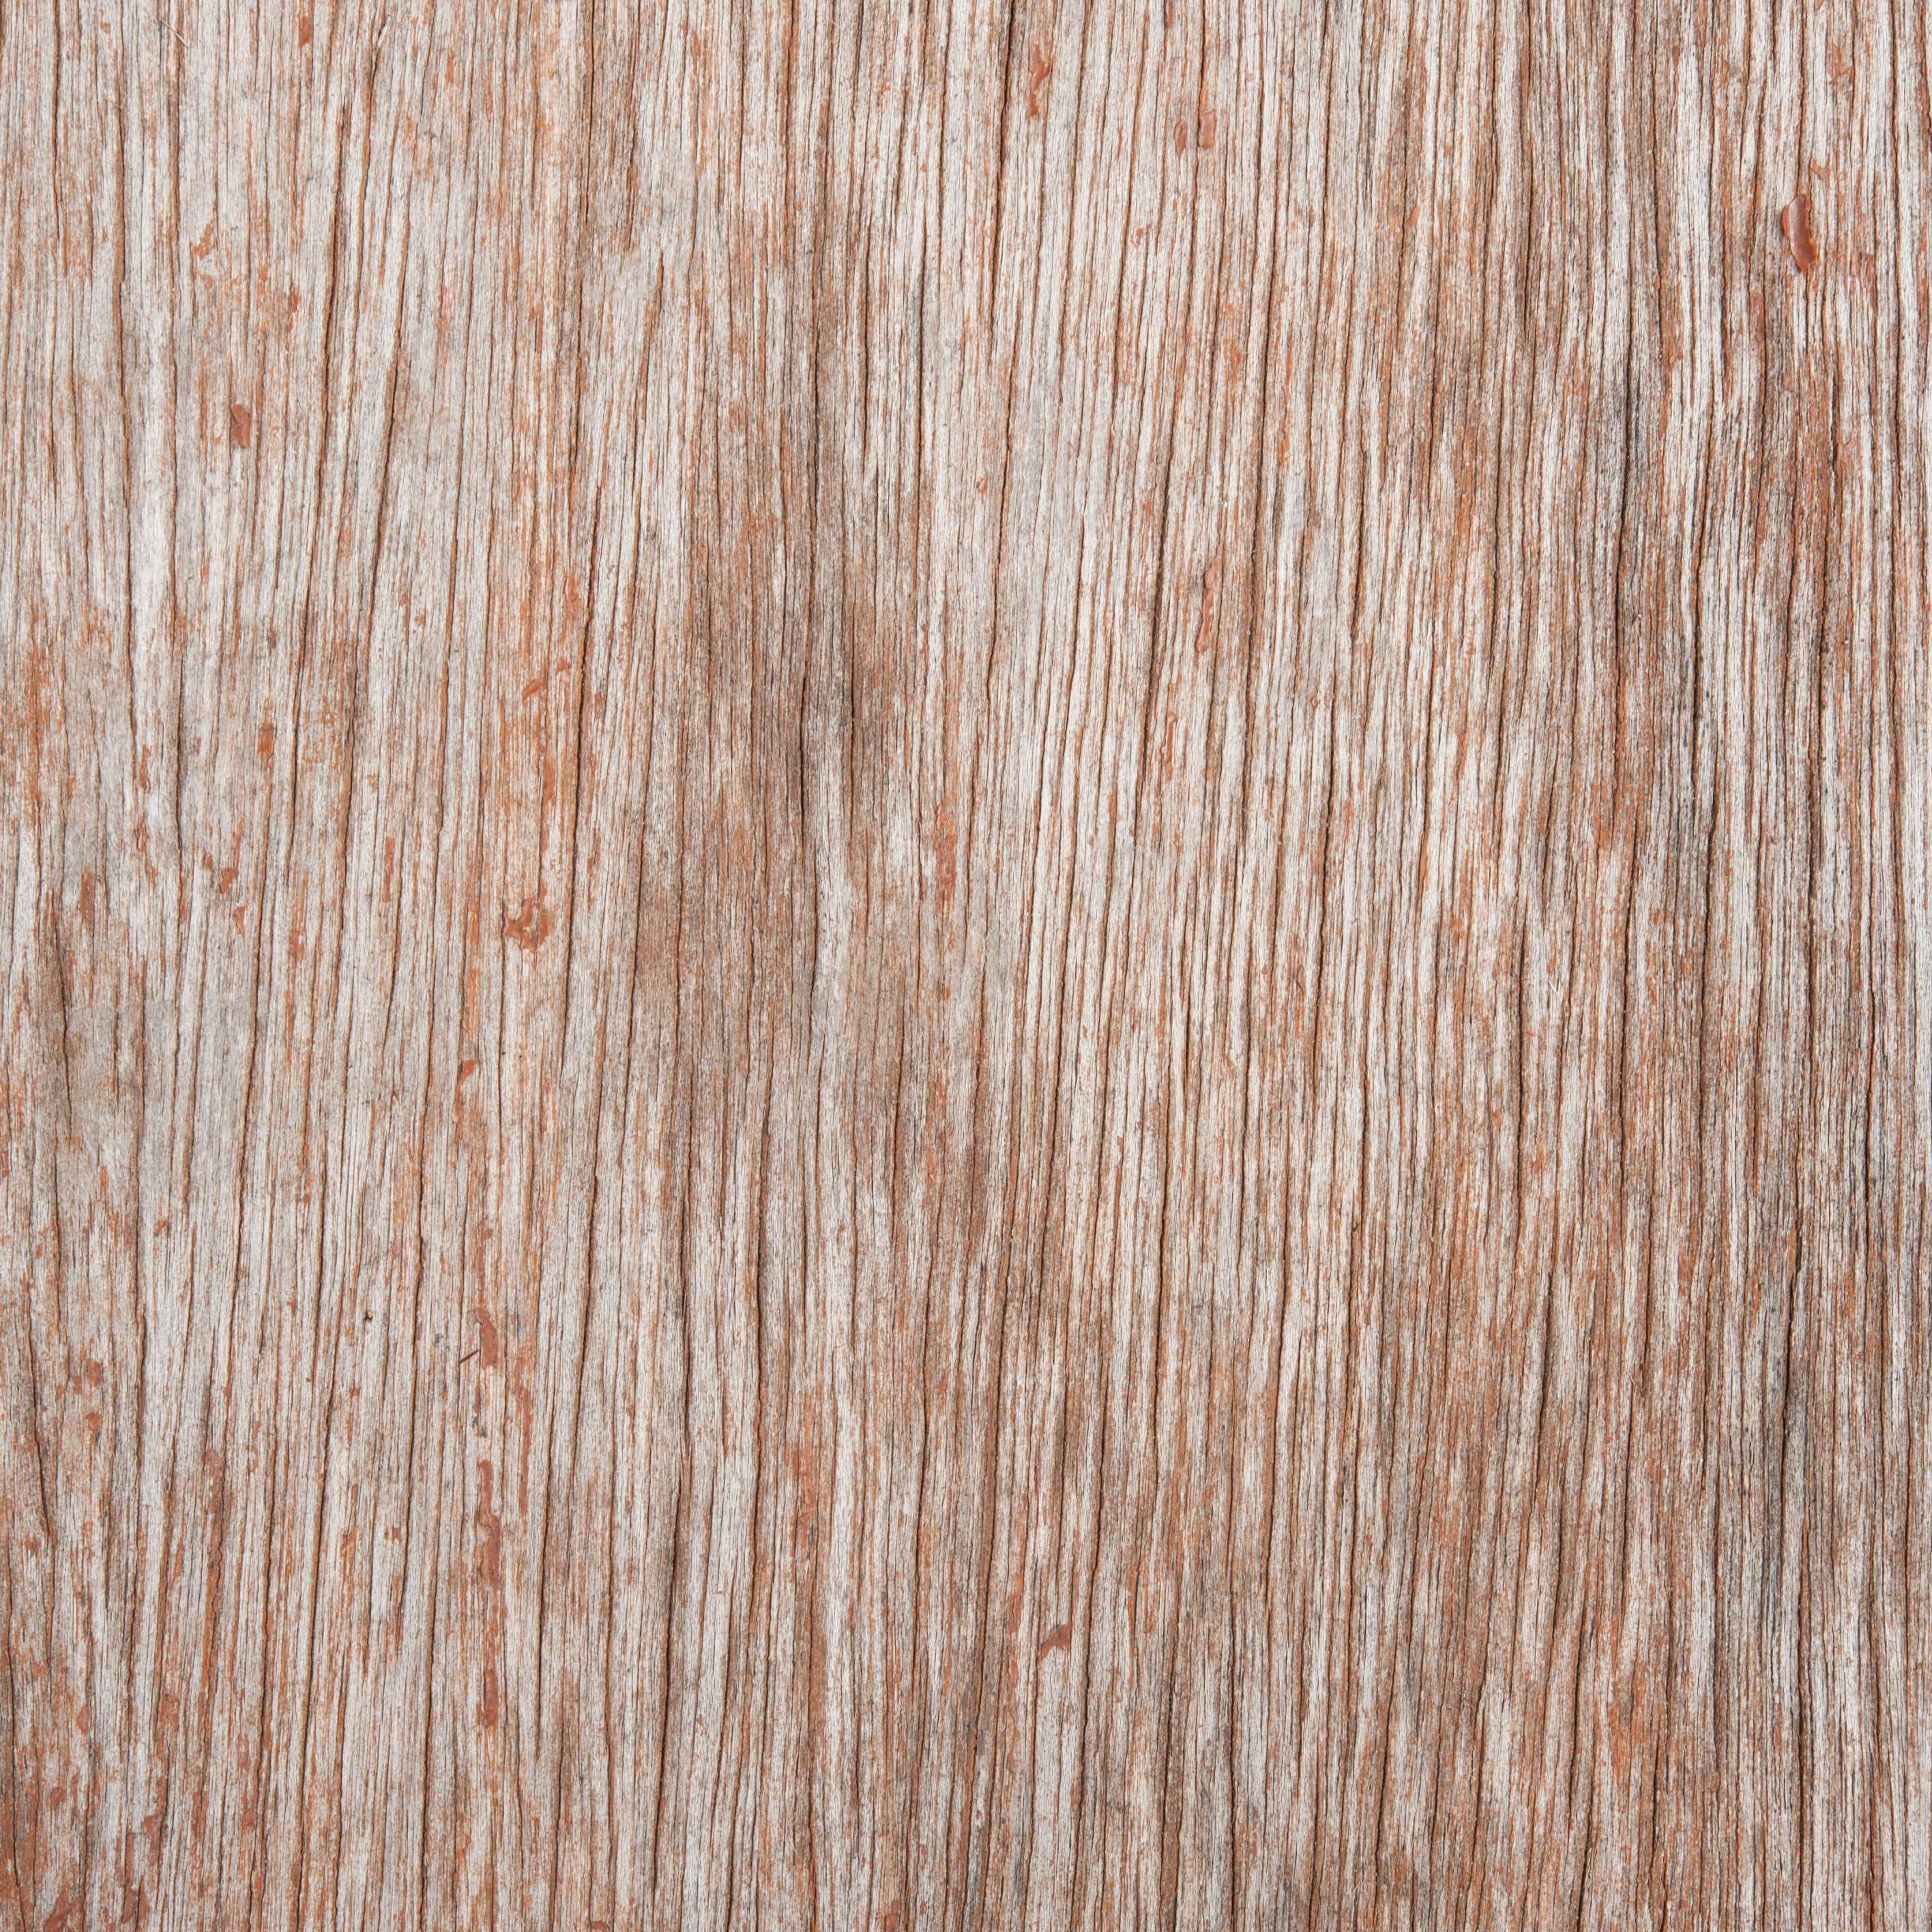 carpentry HD wallpaper, background